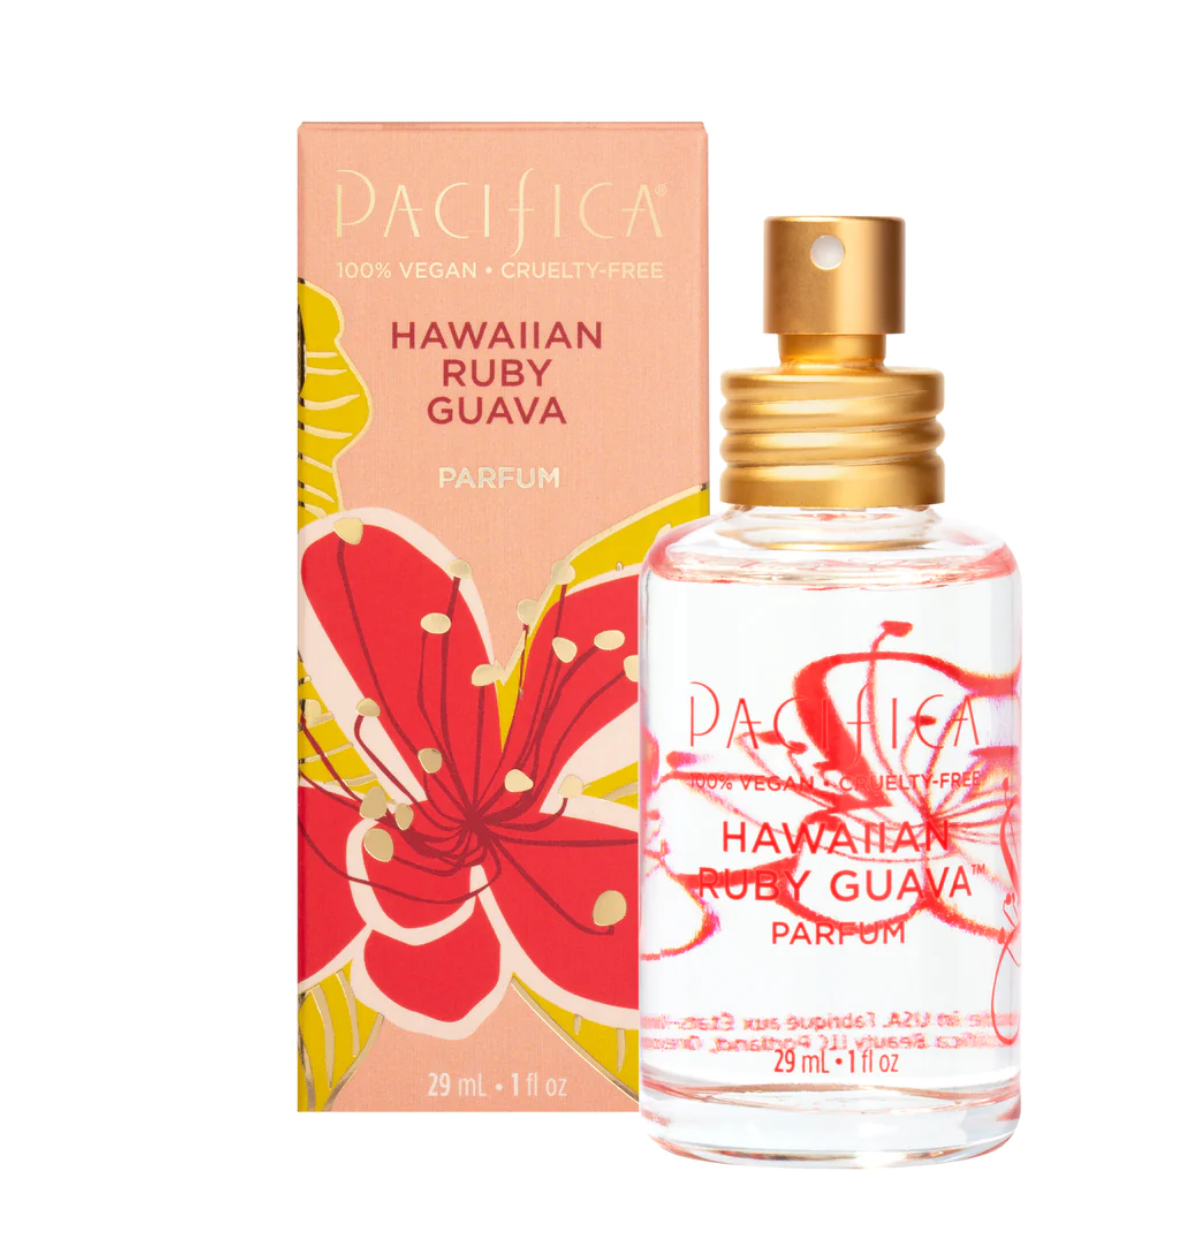 Pacifica Hawaiian Ruby Guava Spray Perfume